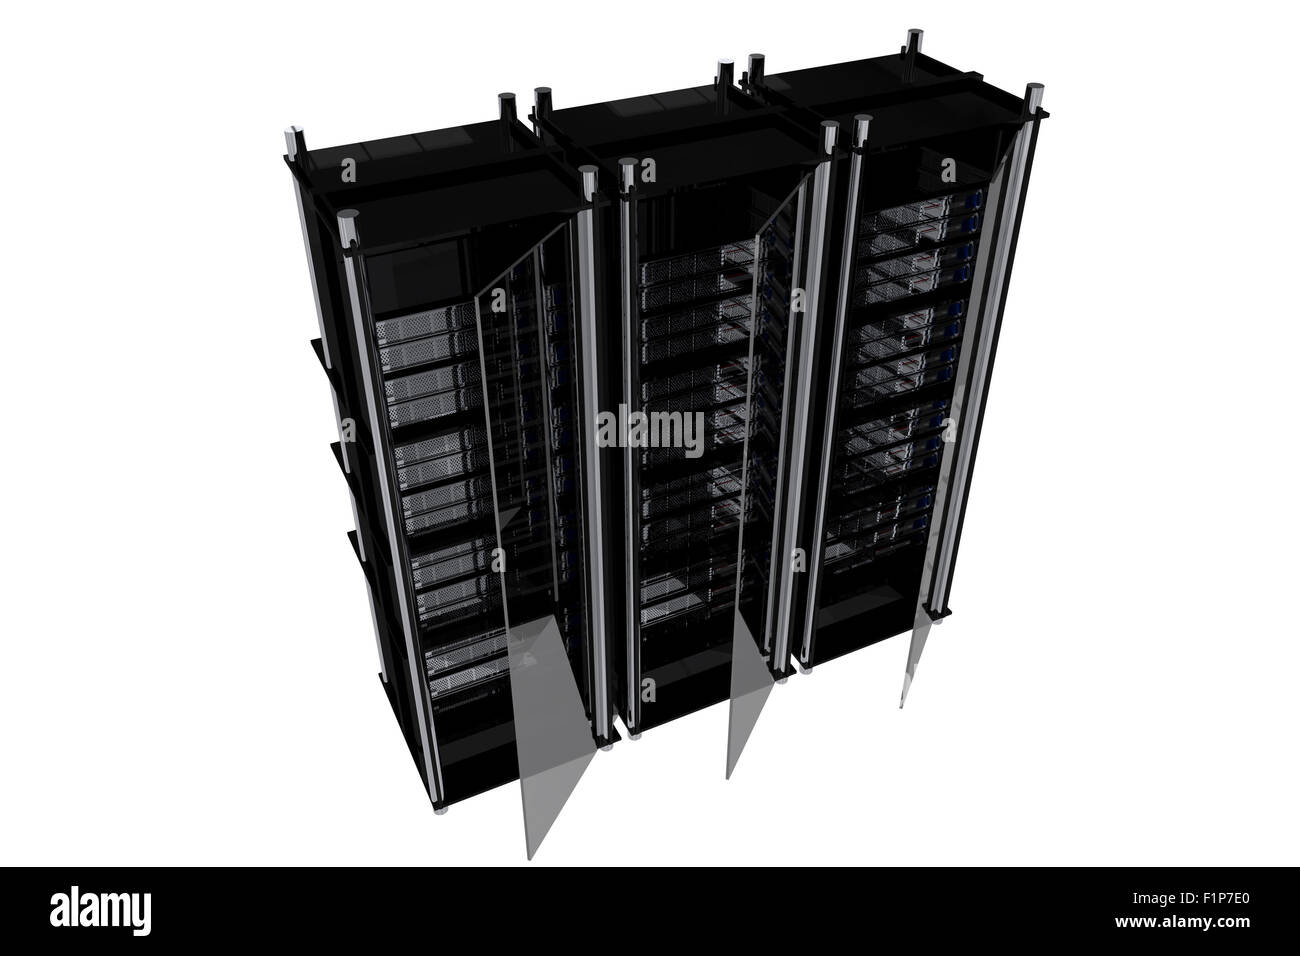 Servers server racks server hi-res stock photography and images - Alamy